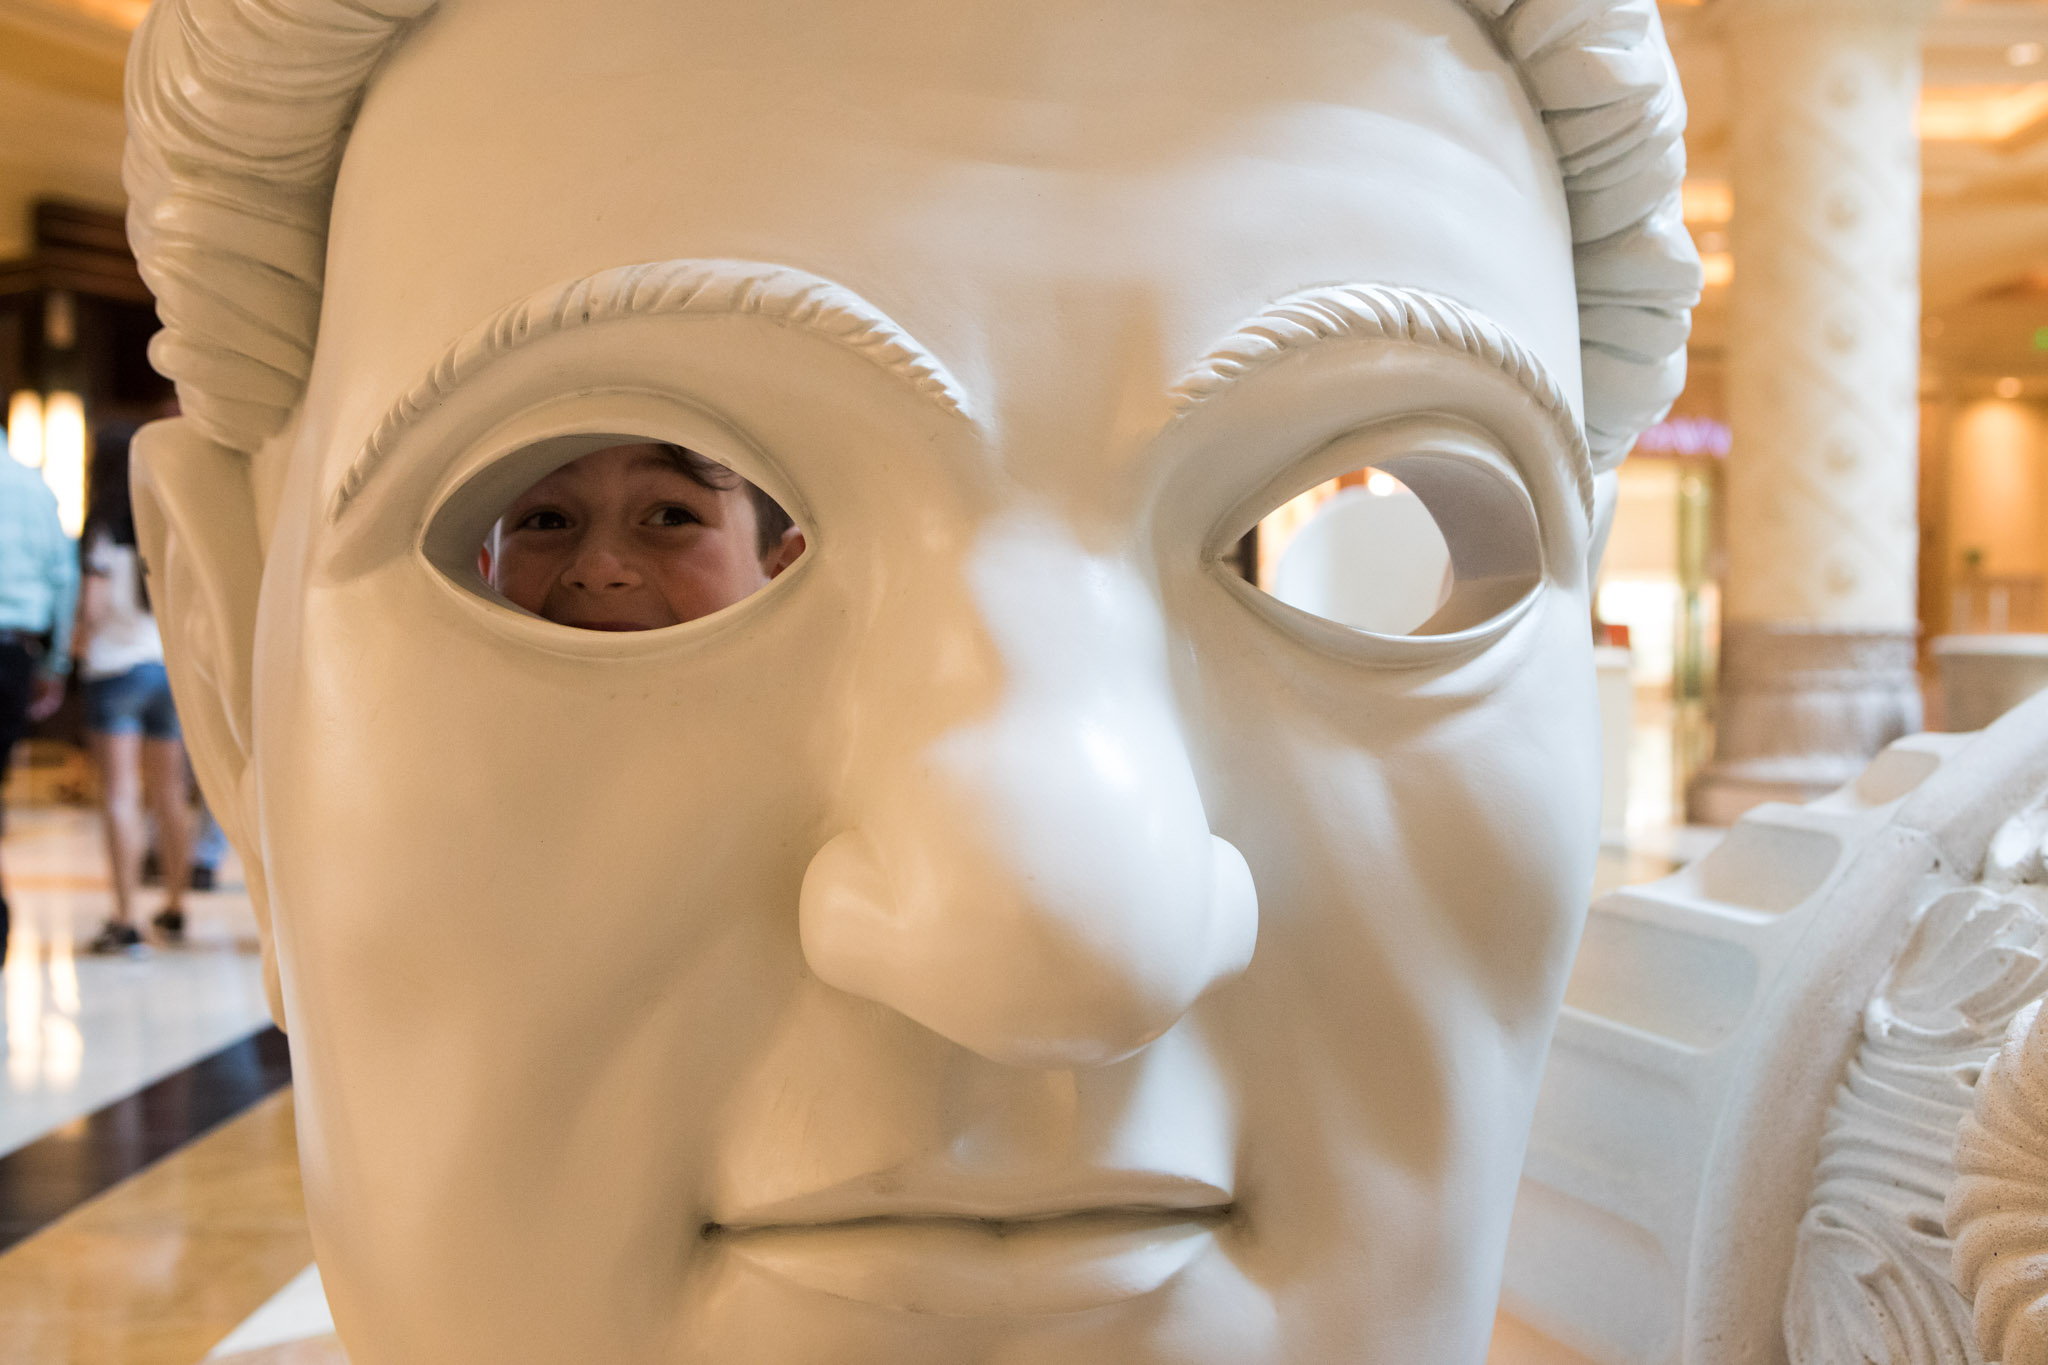 little boy peaking out eye socket of a large face statue.jpg